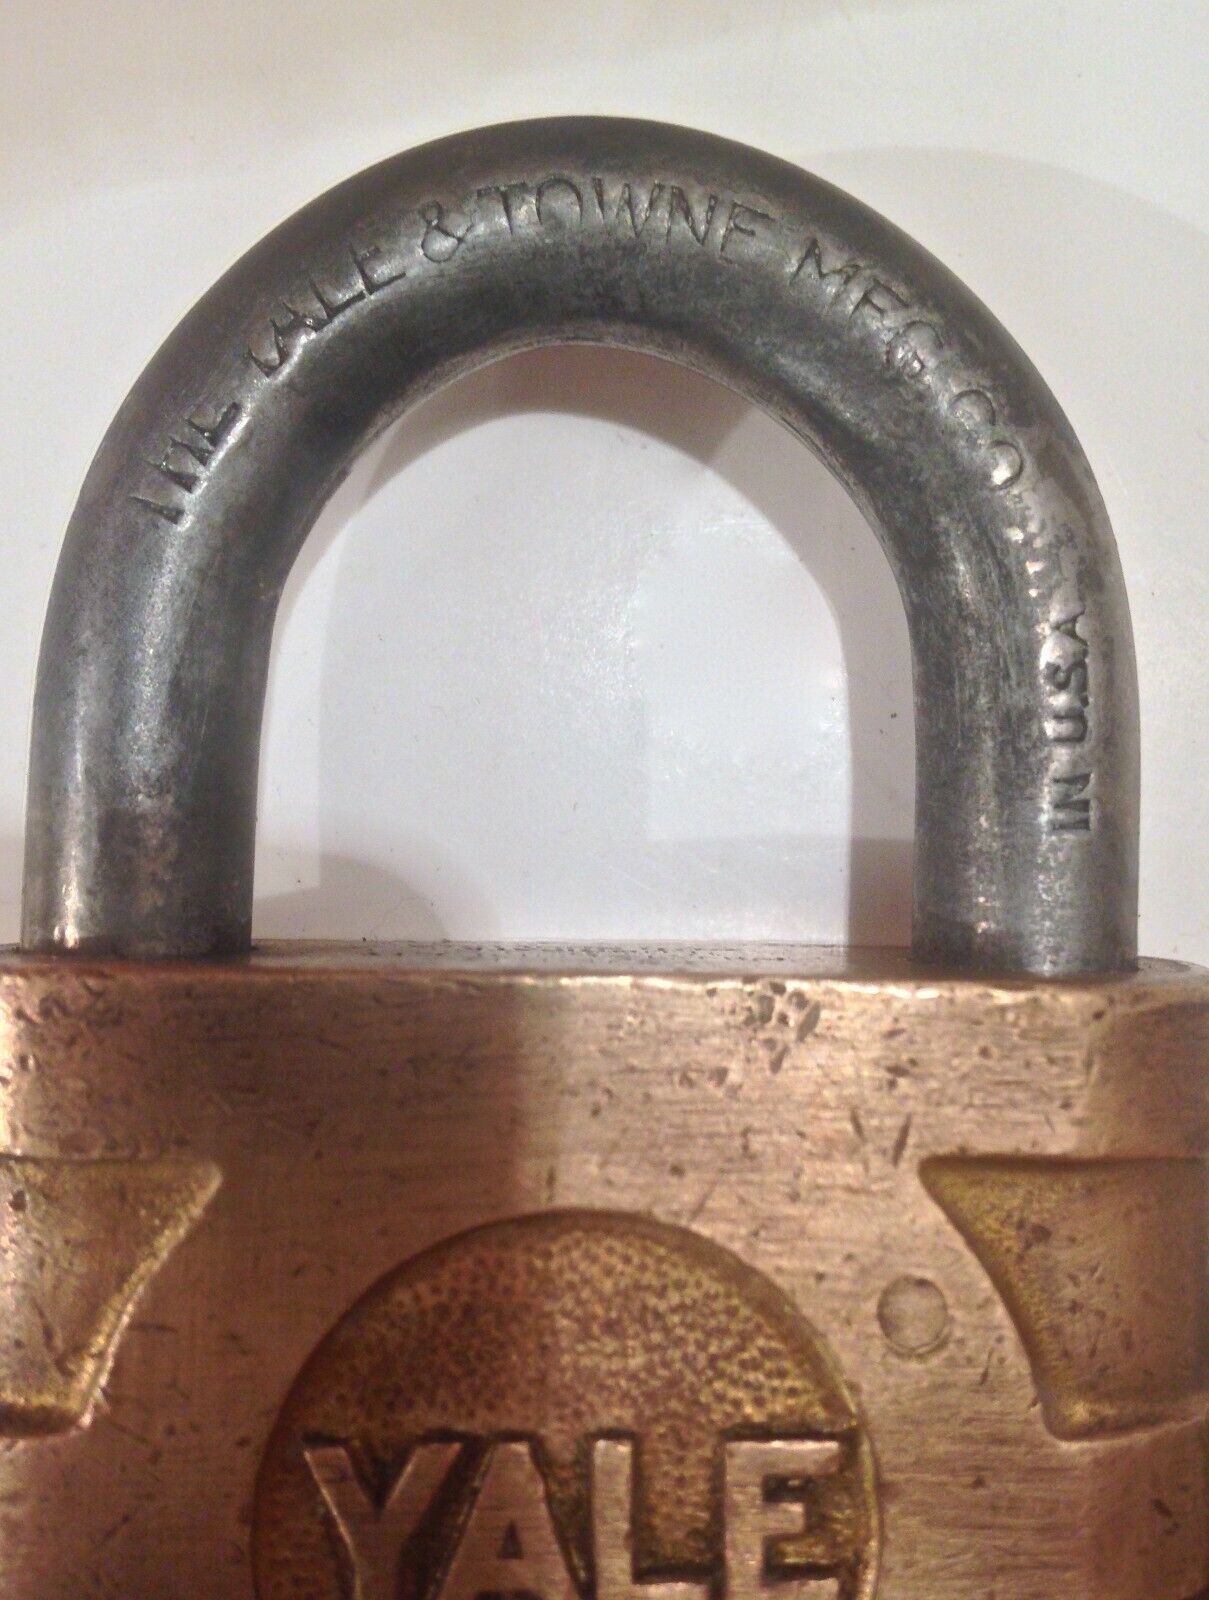 Vintage Yale & Towne Brass Padlock W/ Three Working Keys Nice Lock